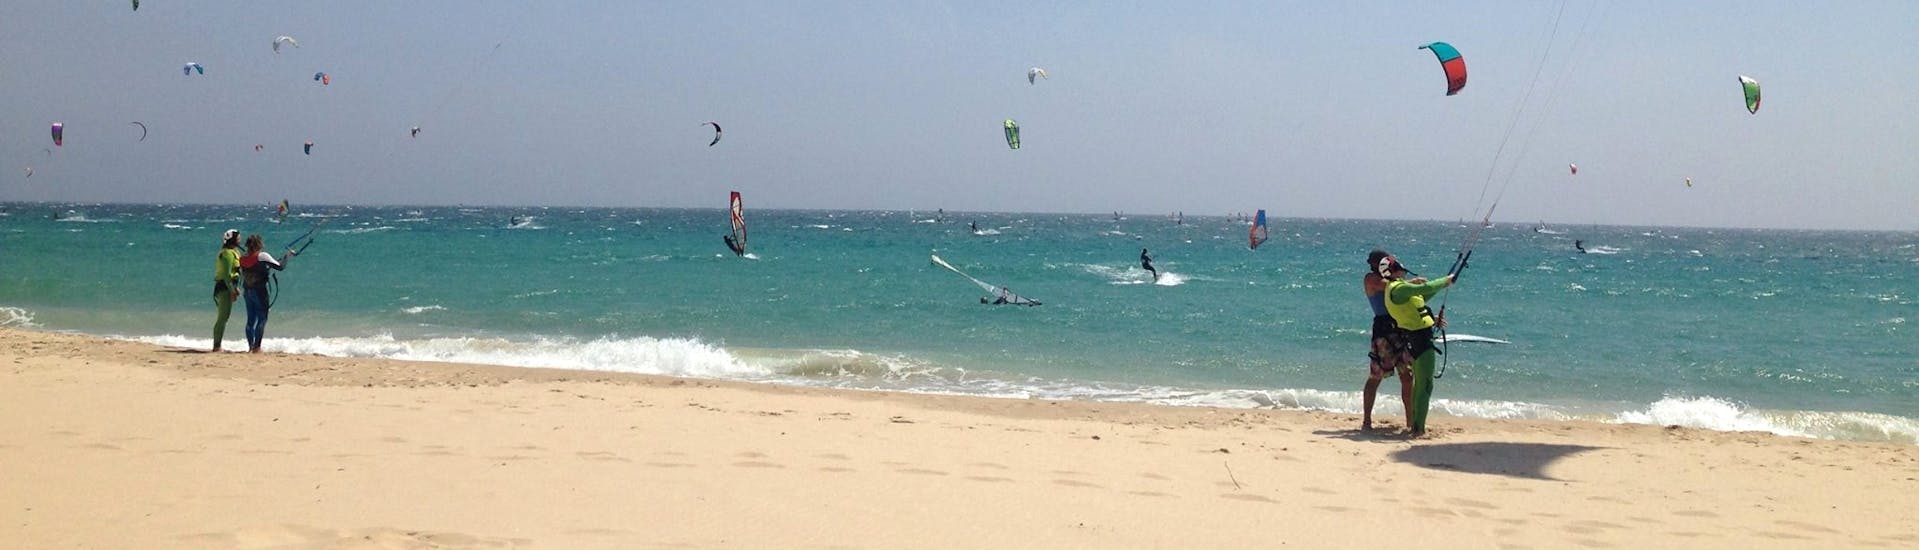 Lezioni private di kitesurf a Tarifa da 12 anni.